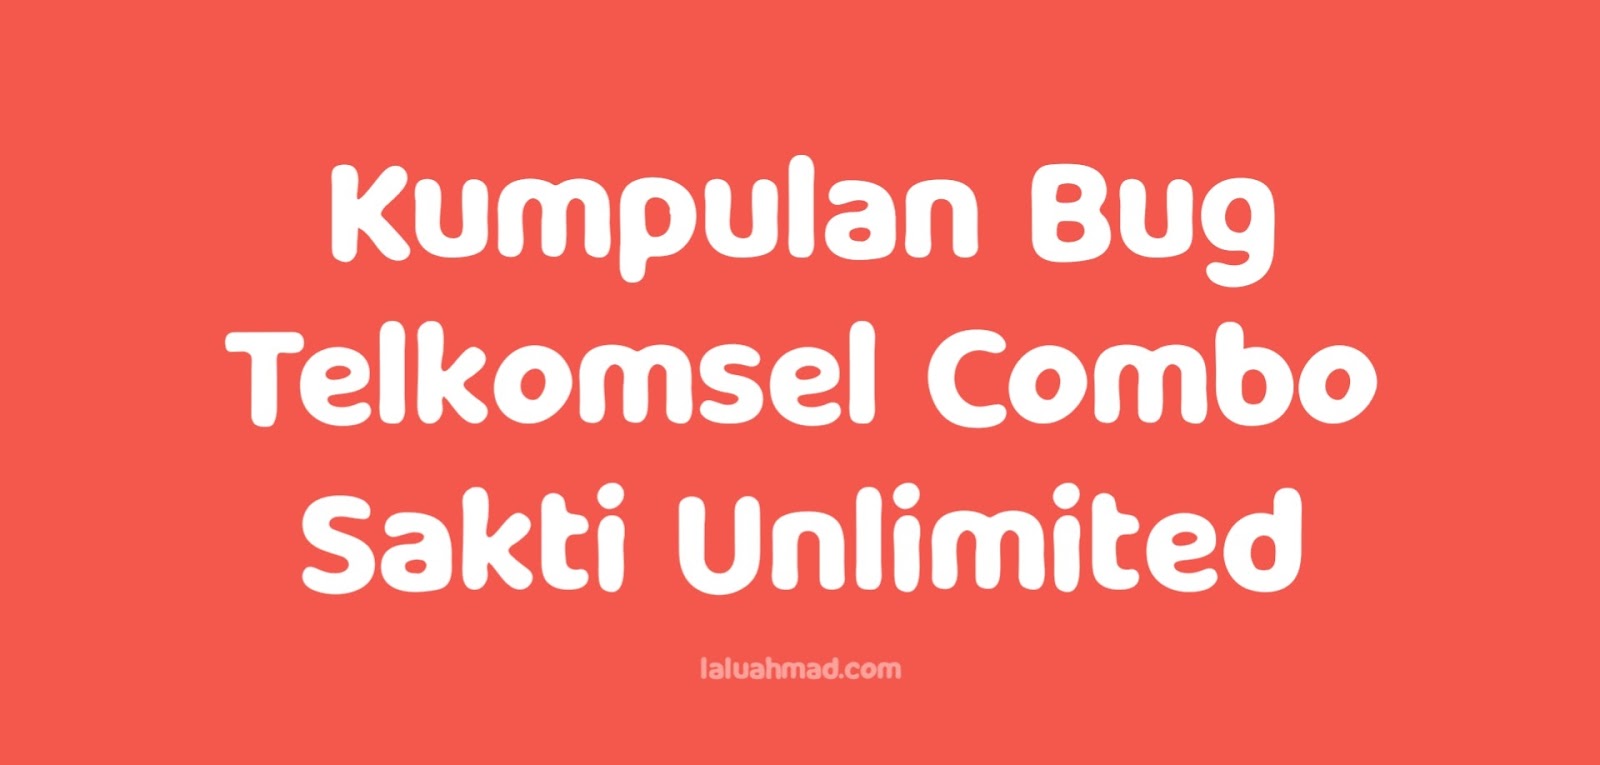 Kumpulan Bug Telkomsel Combo Sakti Unlimited Terbaru